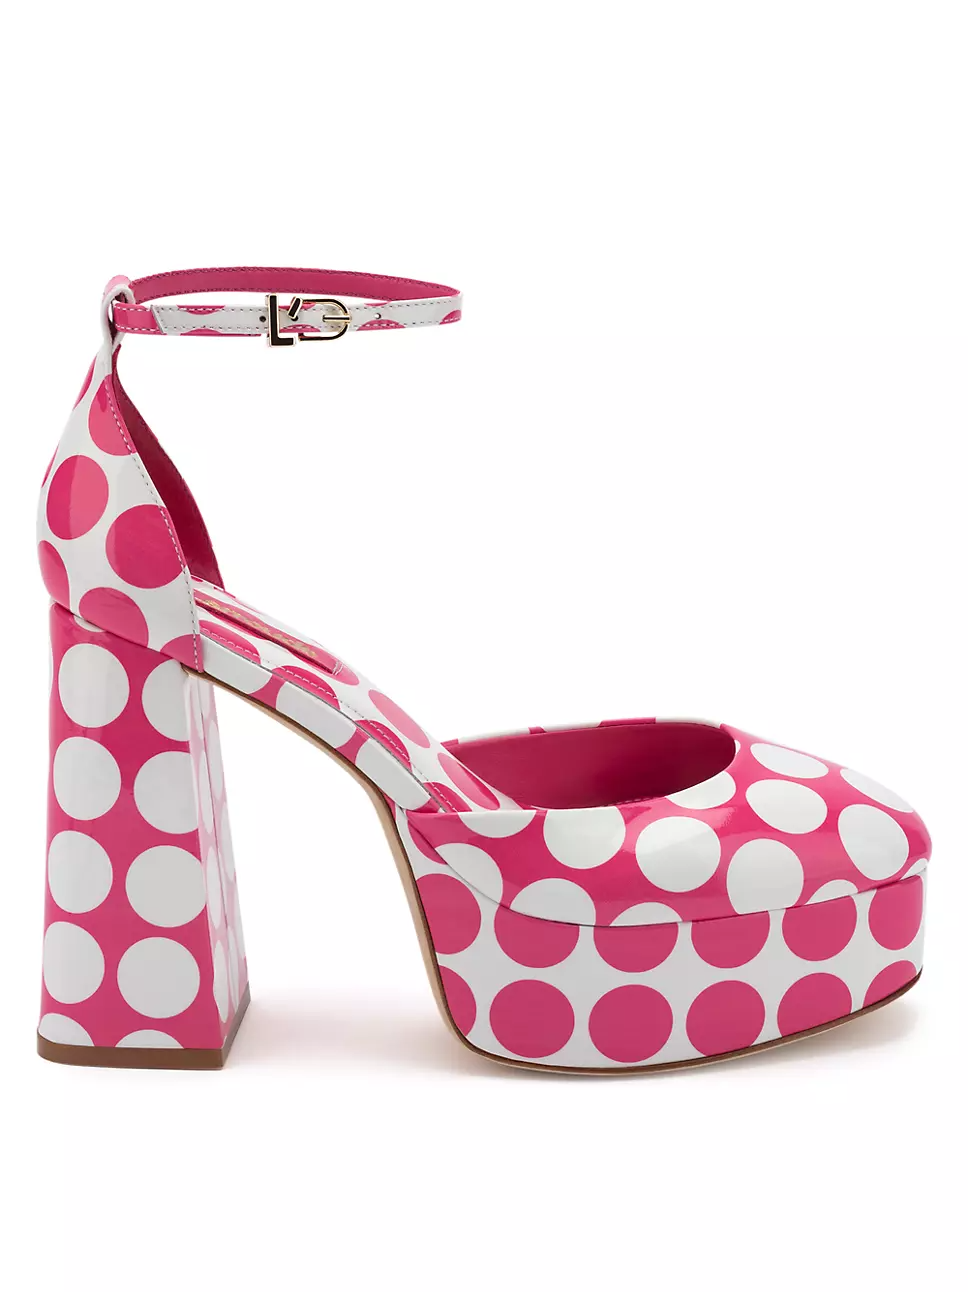 Magenta Wedding Sandals Slingback Stiletto Heels Platform Sandals|FSJshoes